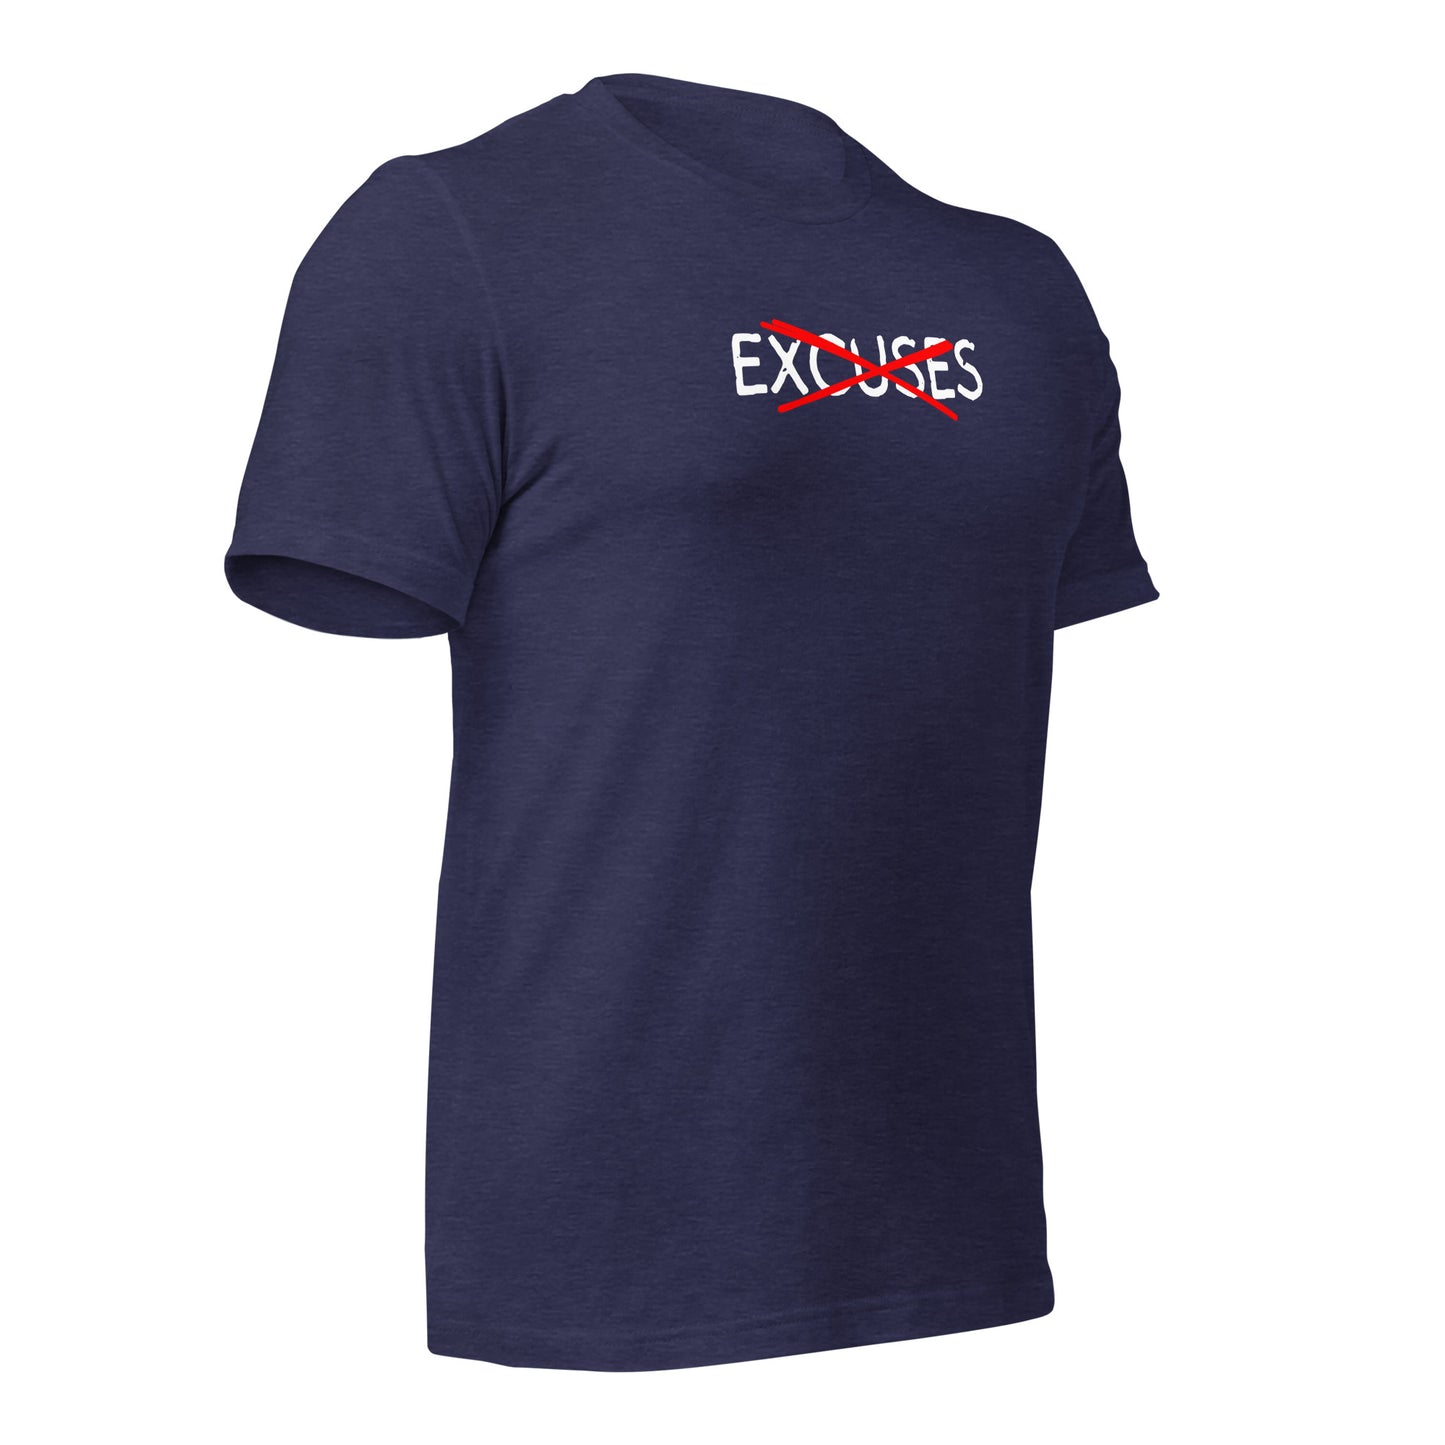 No Excuses Motivational T-Shirt for Entrepreneurs